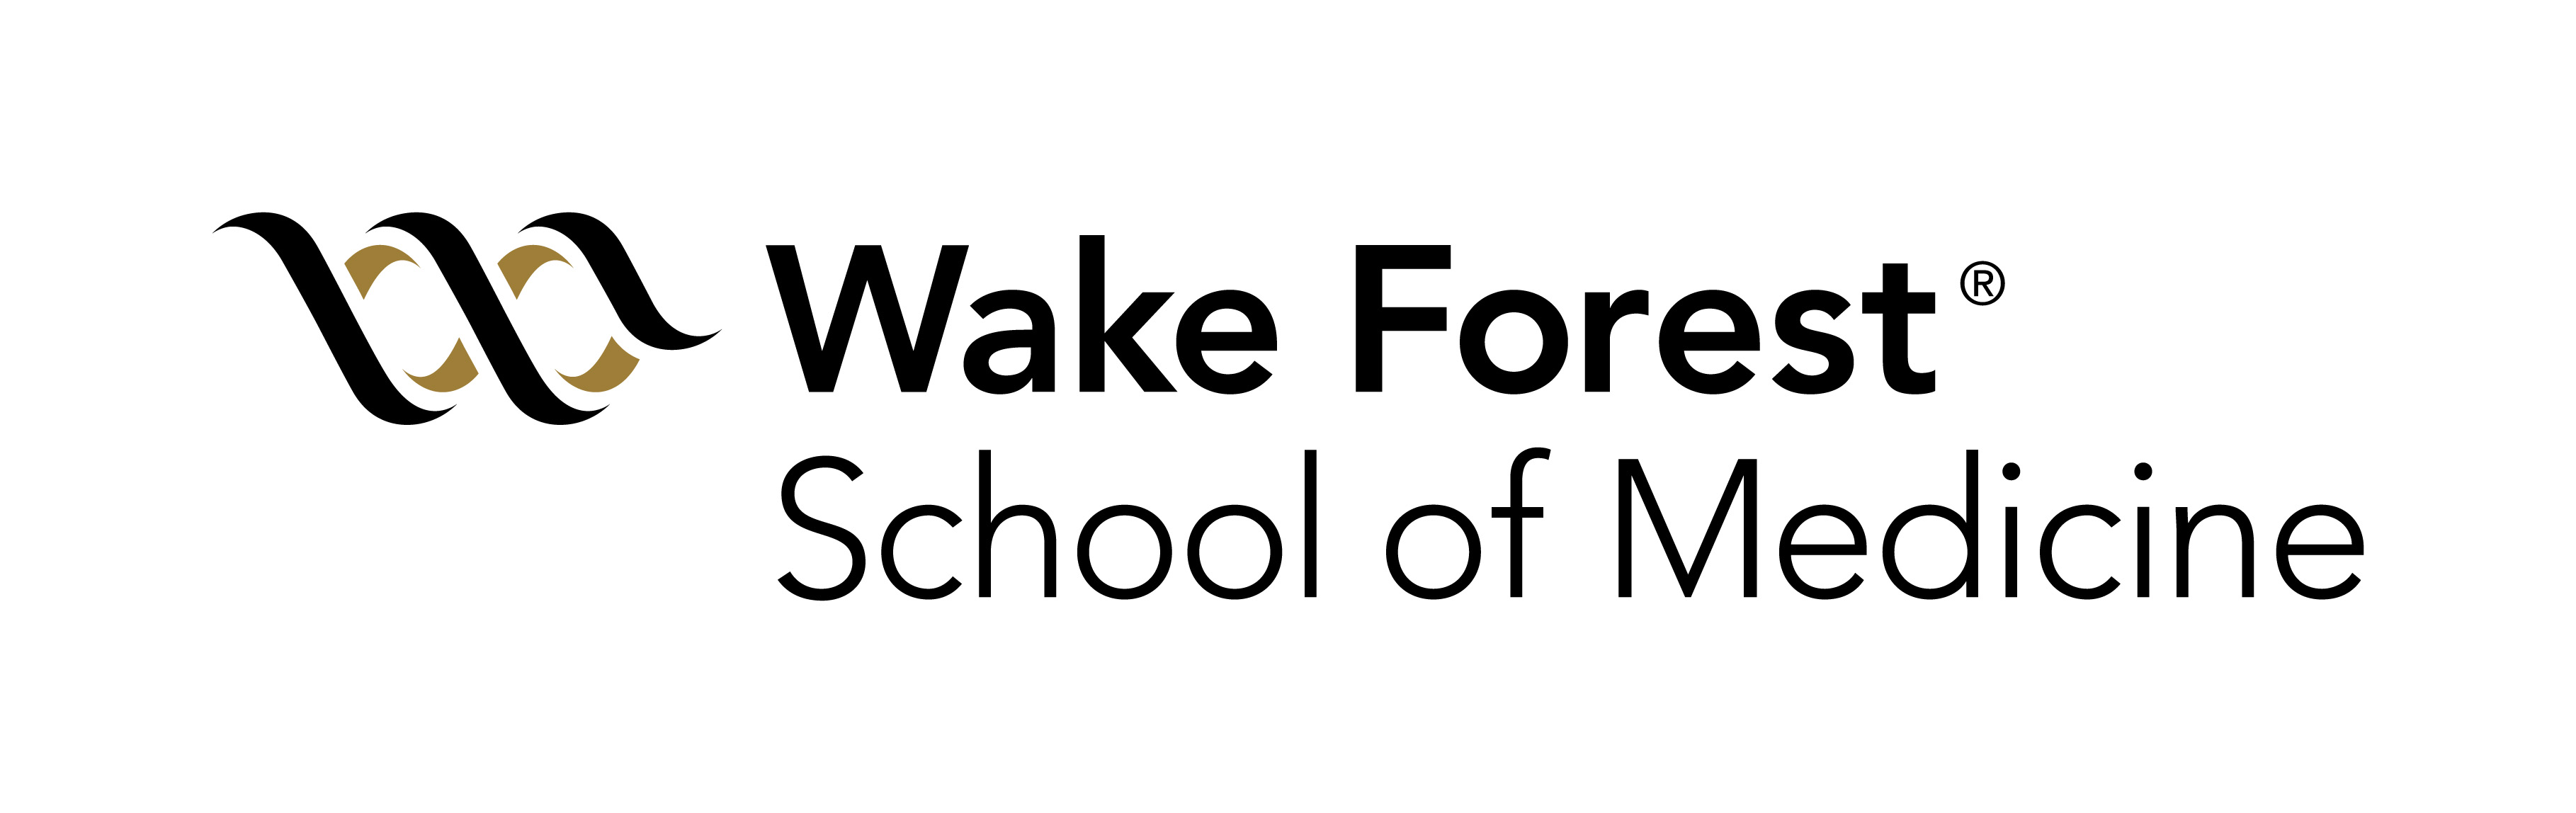 Wake Forest School of Medicine logo